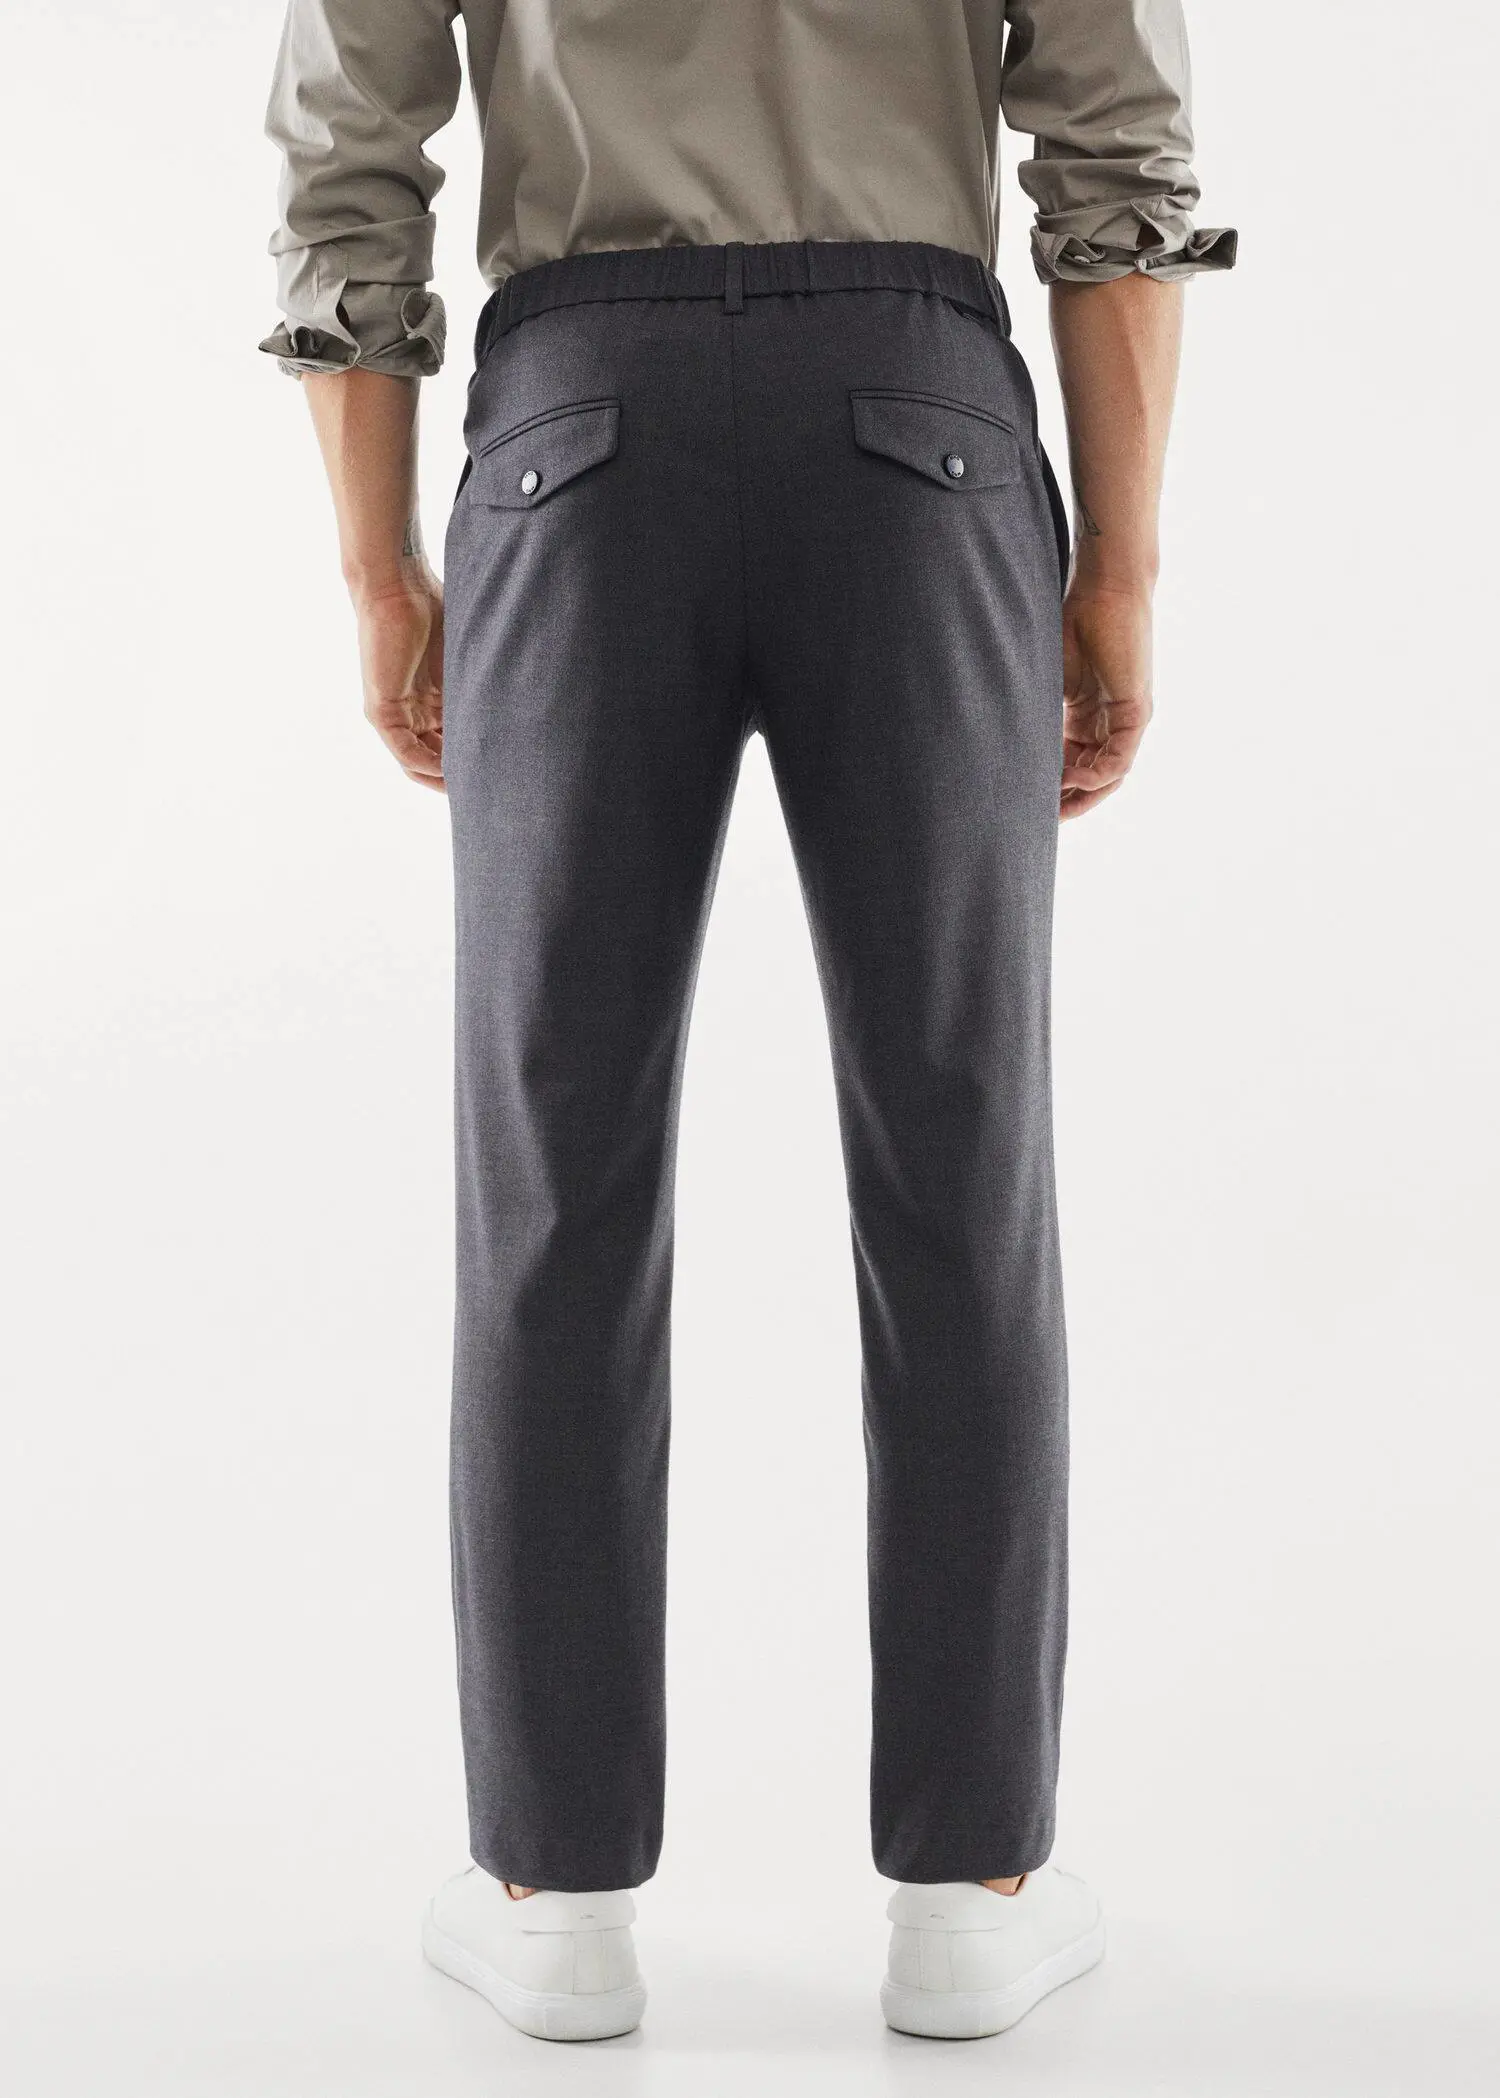 Mango Slim fit technical fabric pants. 3